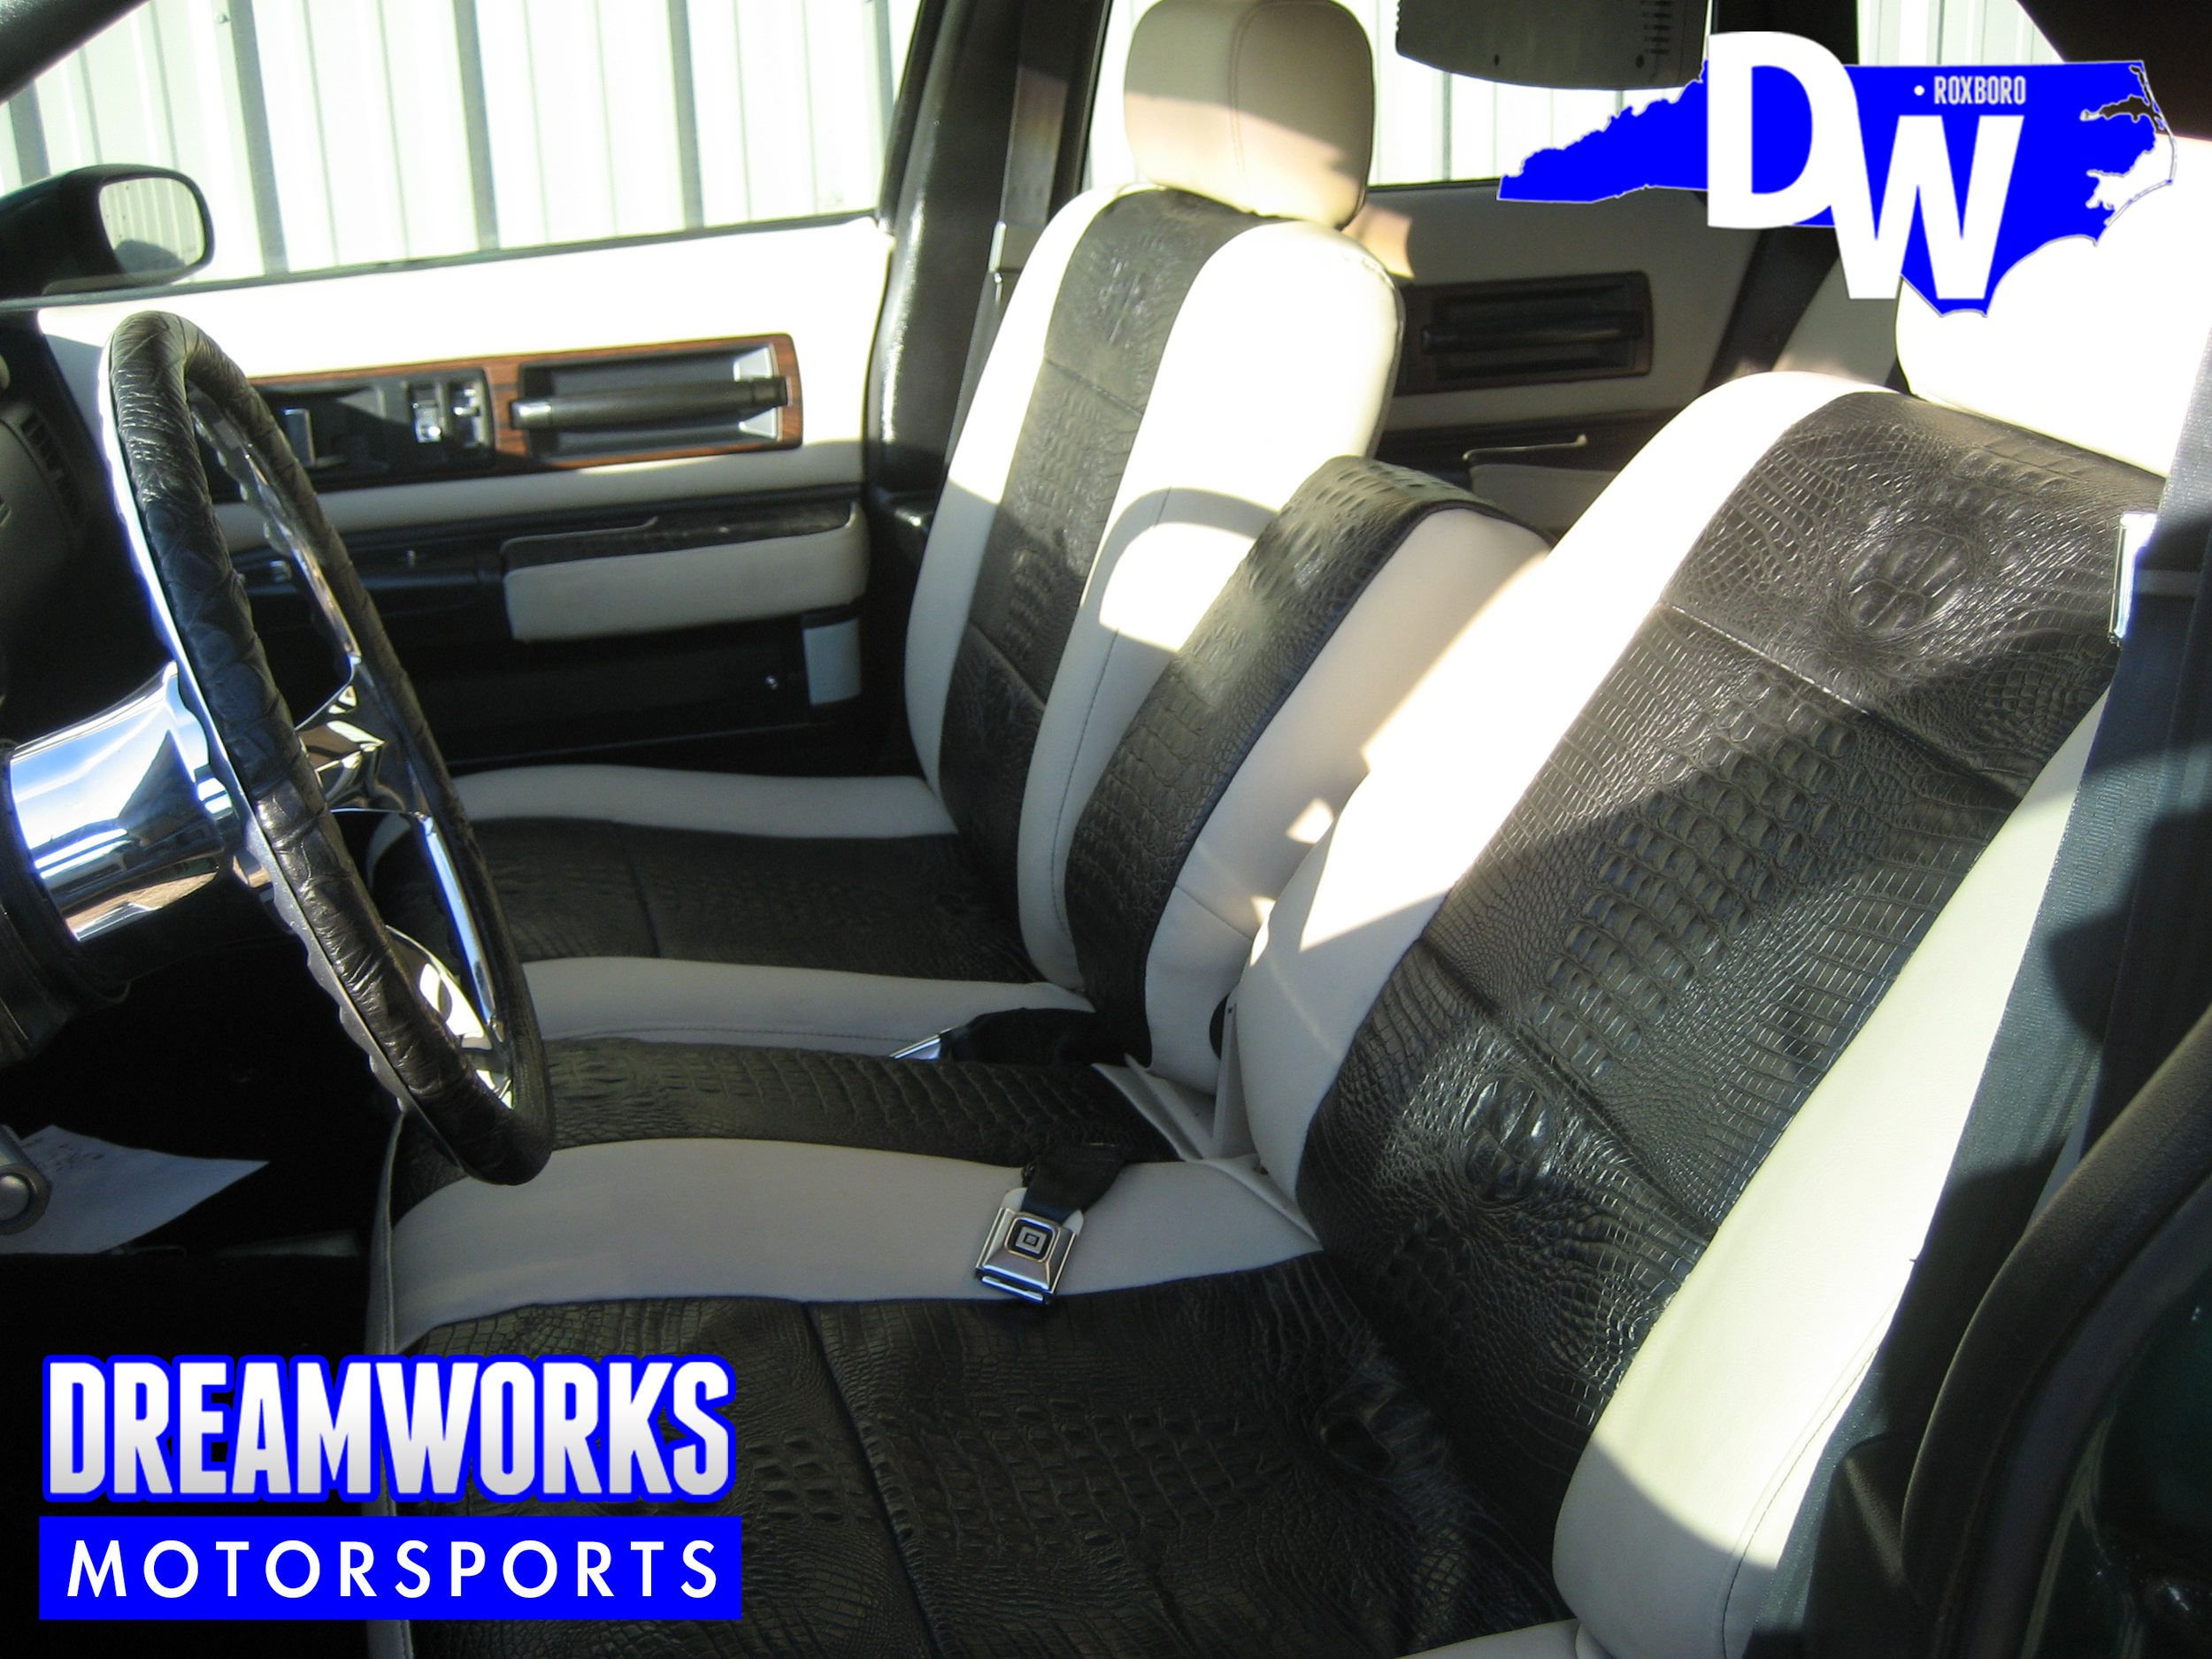 91-Chevrolet-Caprice-Dreamworks-Motorsports-5.jpg